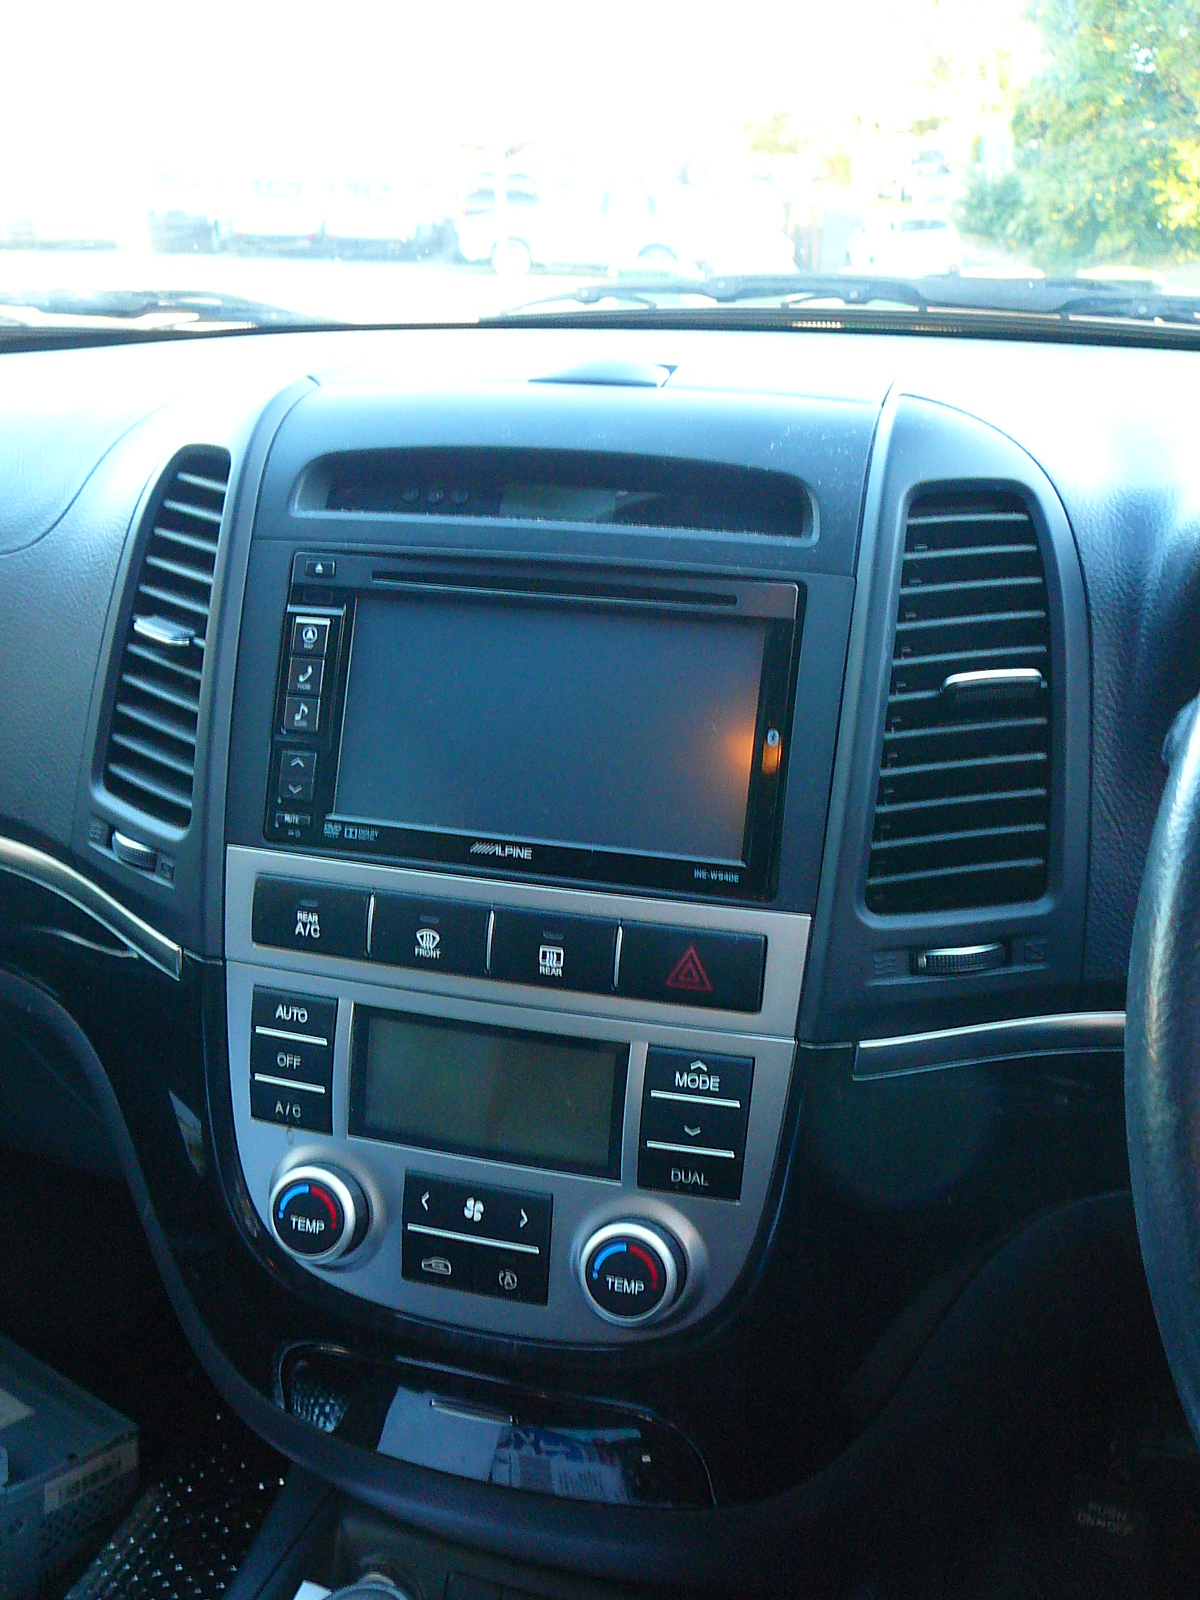 Hyundai Santa Fe 2009, Alpine INE-W940 GPS Navigation Installation